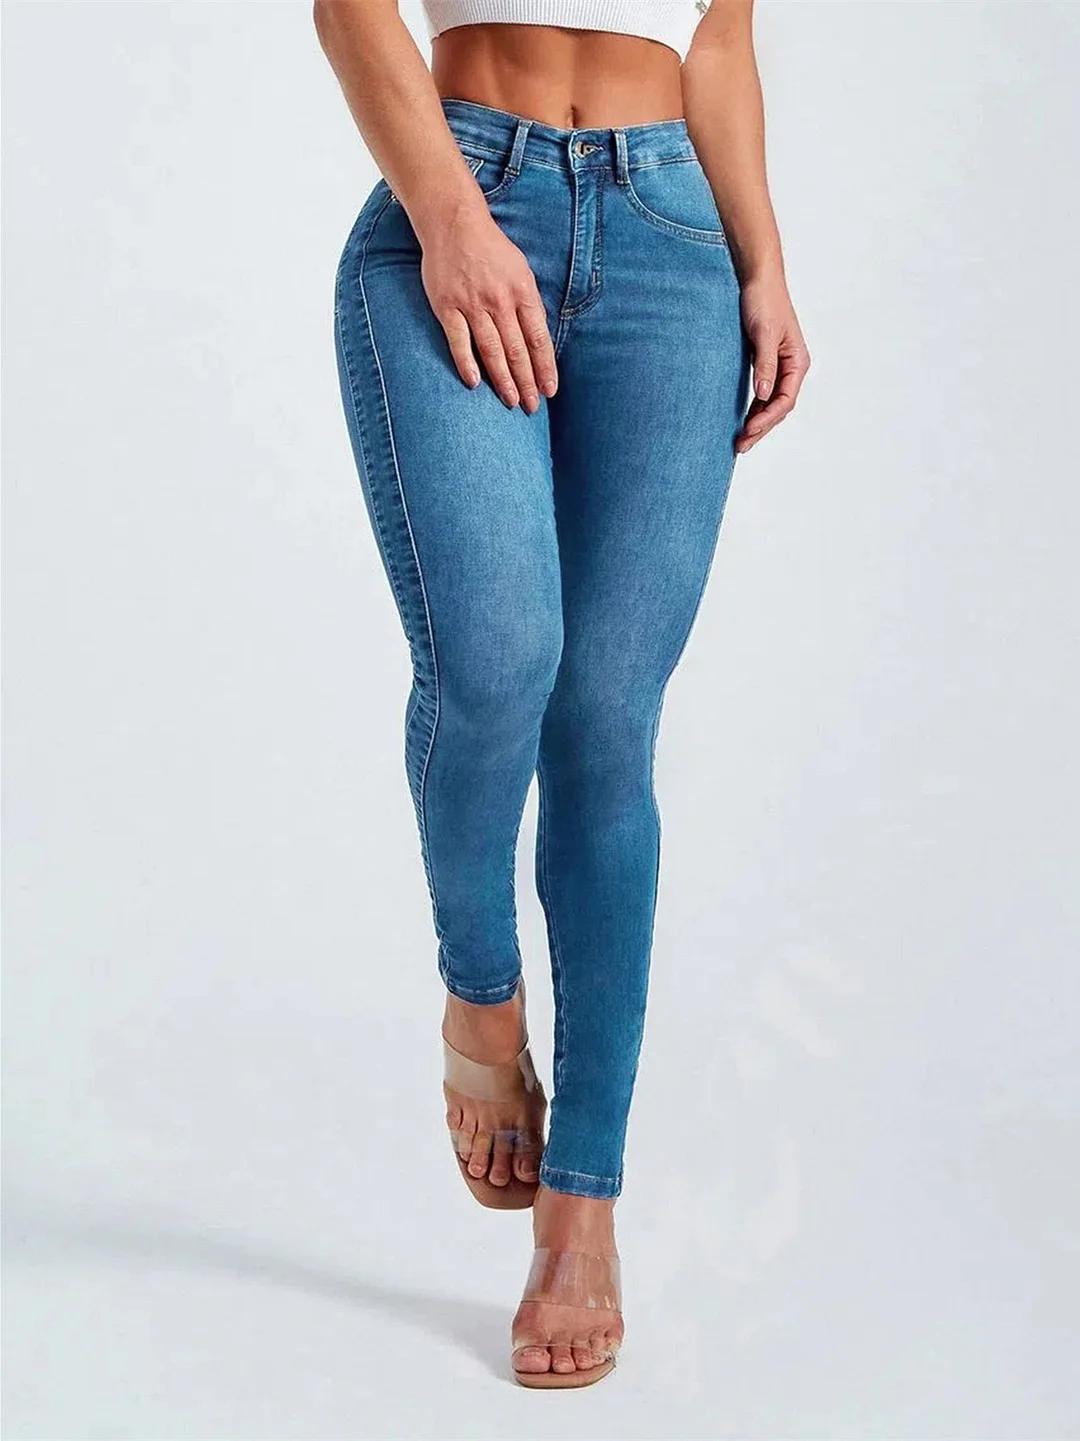 Women's Slim Fit Pencil Stretch High Waist Jeans Pants